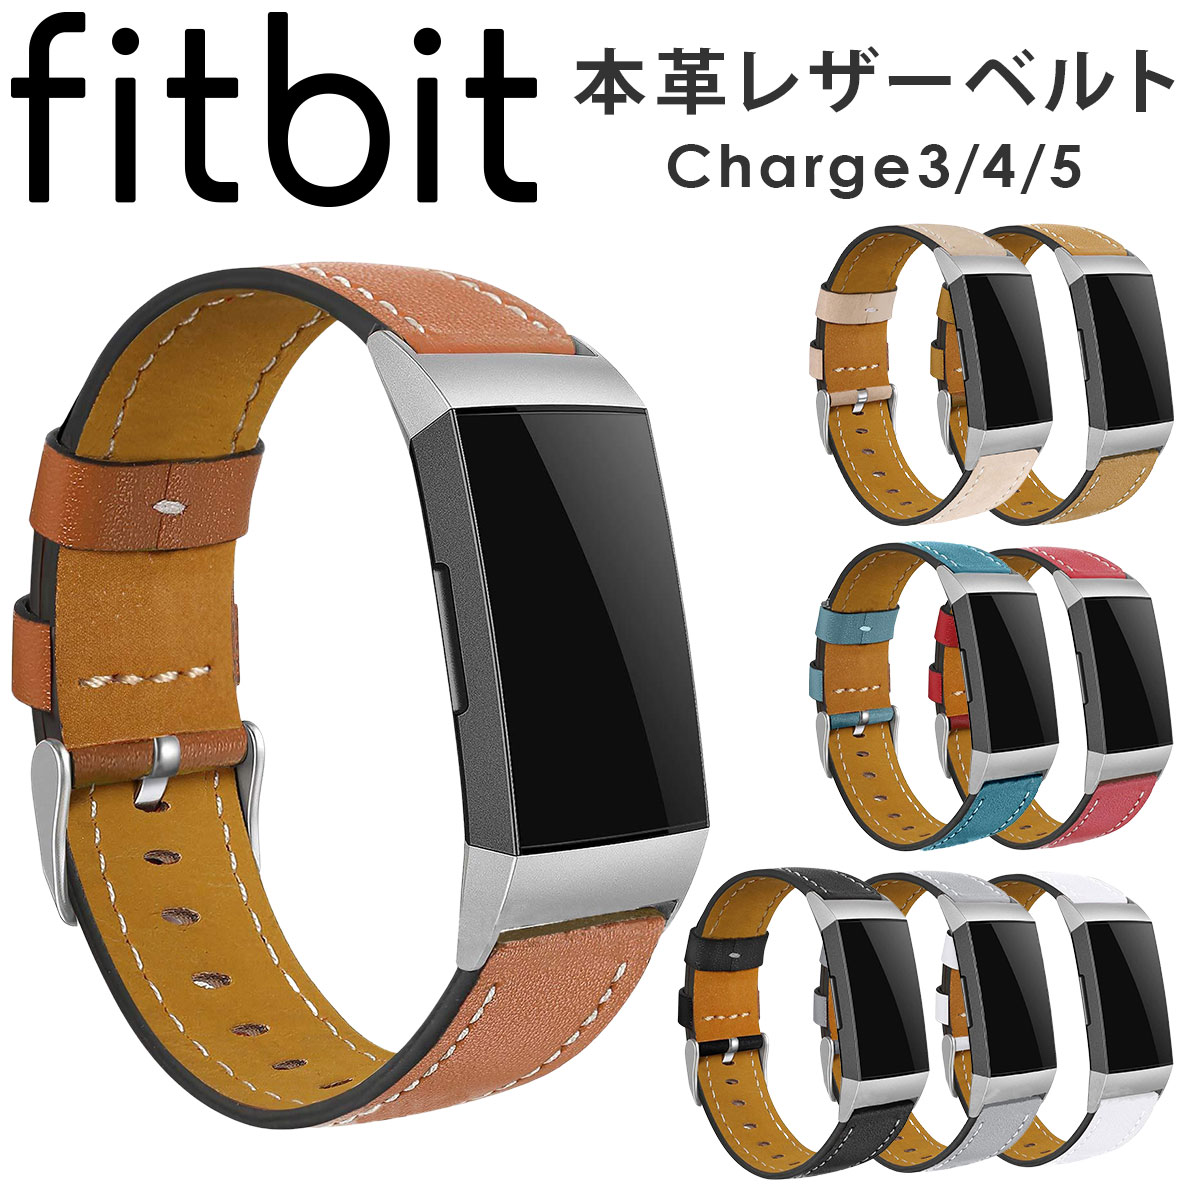 Fitbit Charge3 Charge4 Charge5 バンド 交換 革 フィットビット チャージ 3 4 5 対応 ベルト レザー  :c809:いいひ Yahoo!ショッピング店 - 通販 - Yahoo!ショッピング